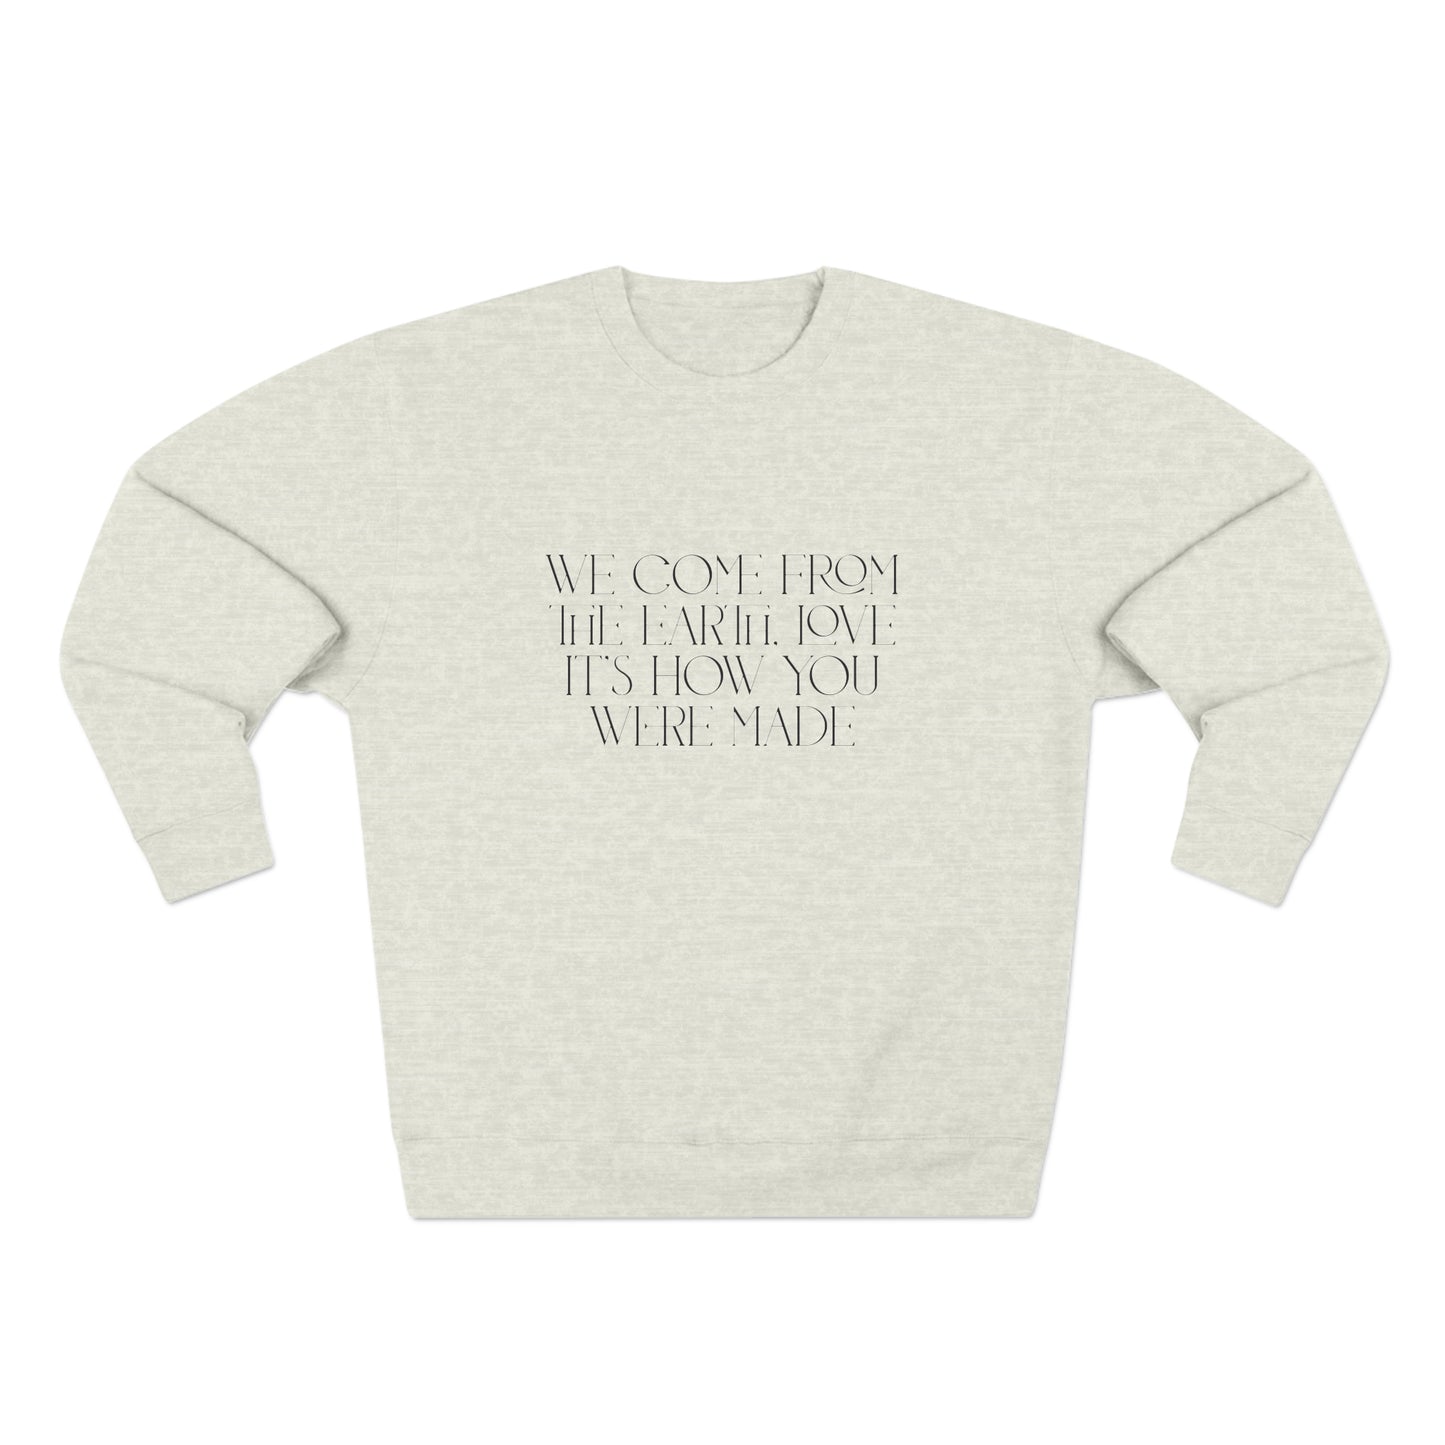 "We come from the Earth Love" -  Unisex Premium Crewneck Sweatshirt